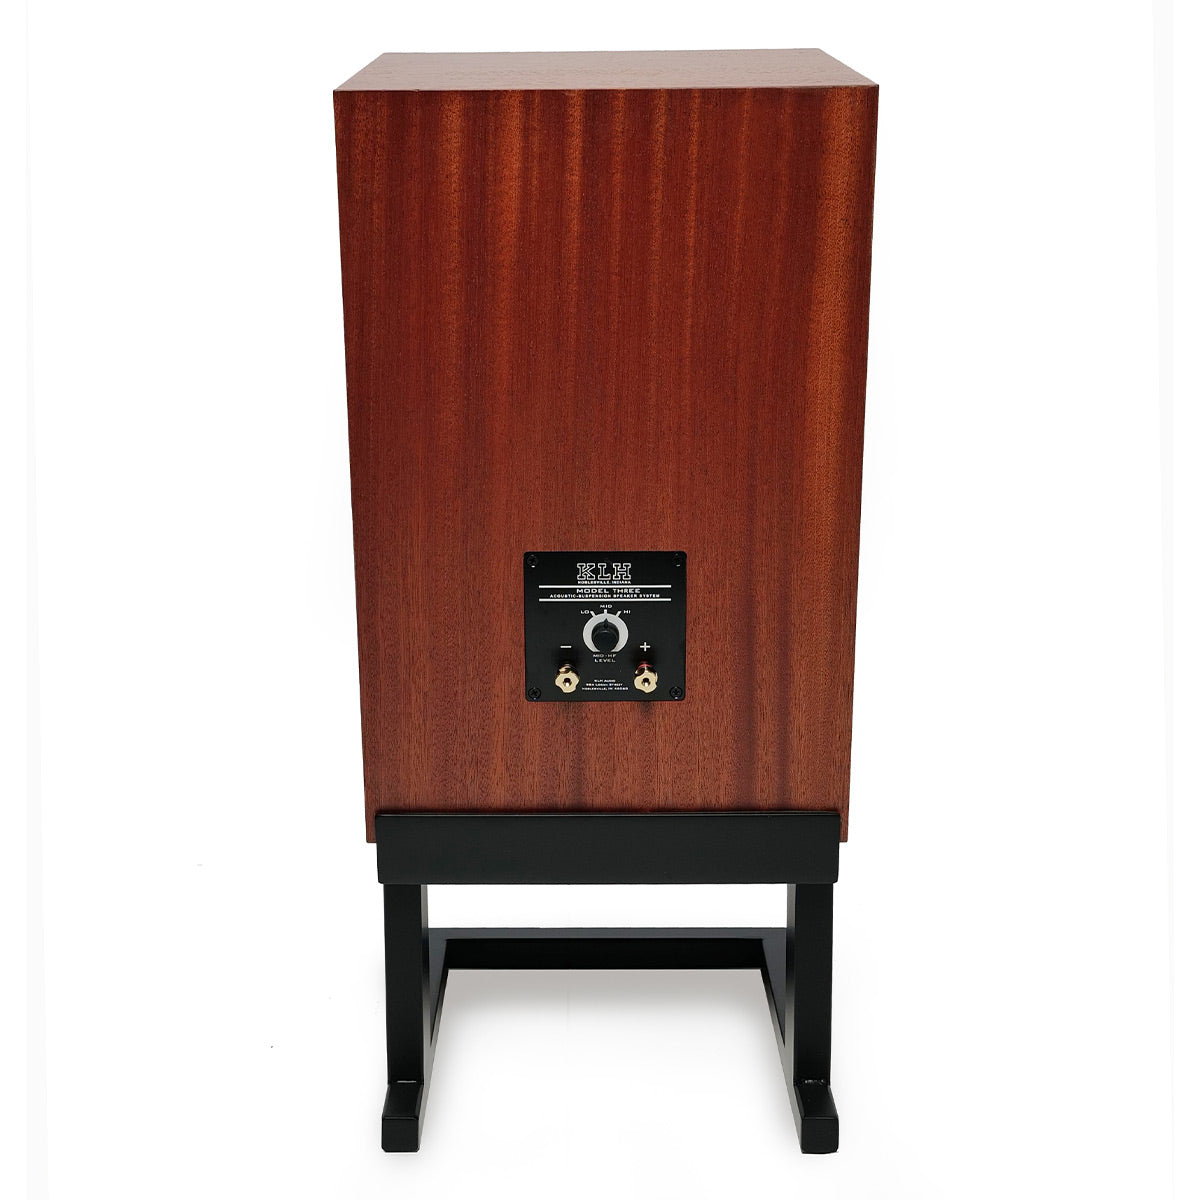 KLH Model Three 2-way 8-inch Acoustic Suspension Bookshelf Speaker - Pair (West African Mahogany)